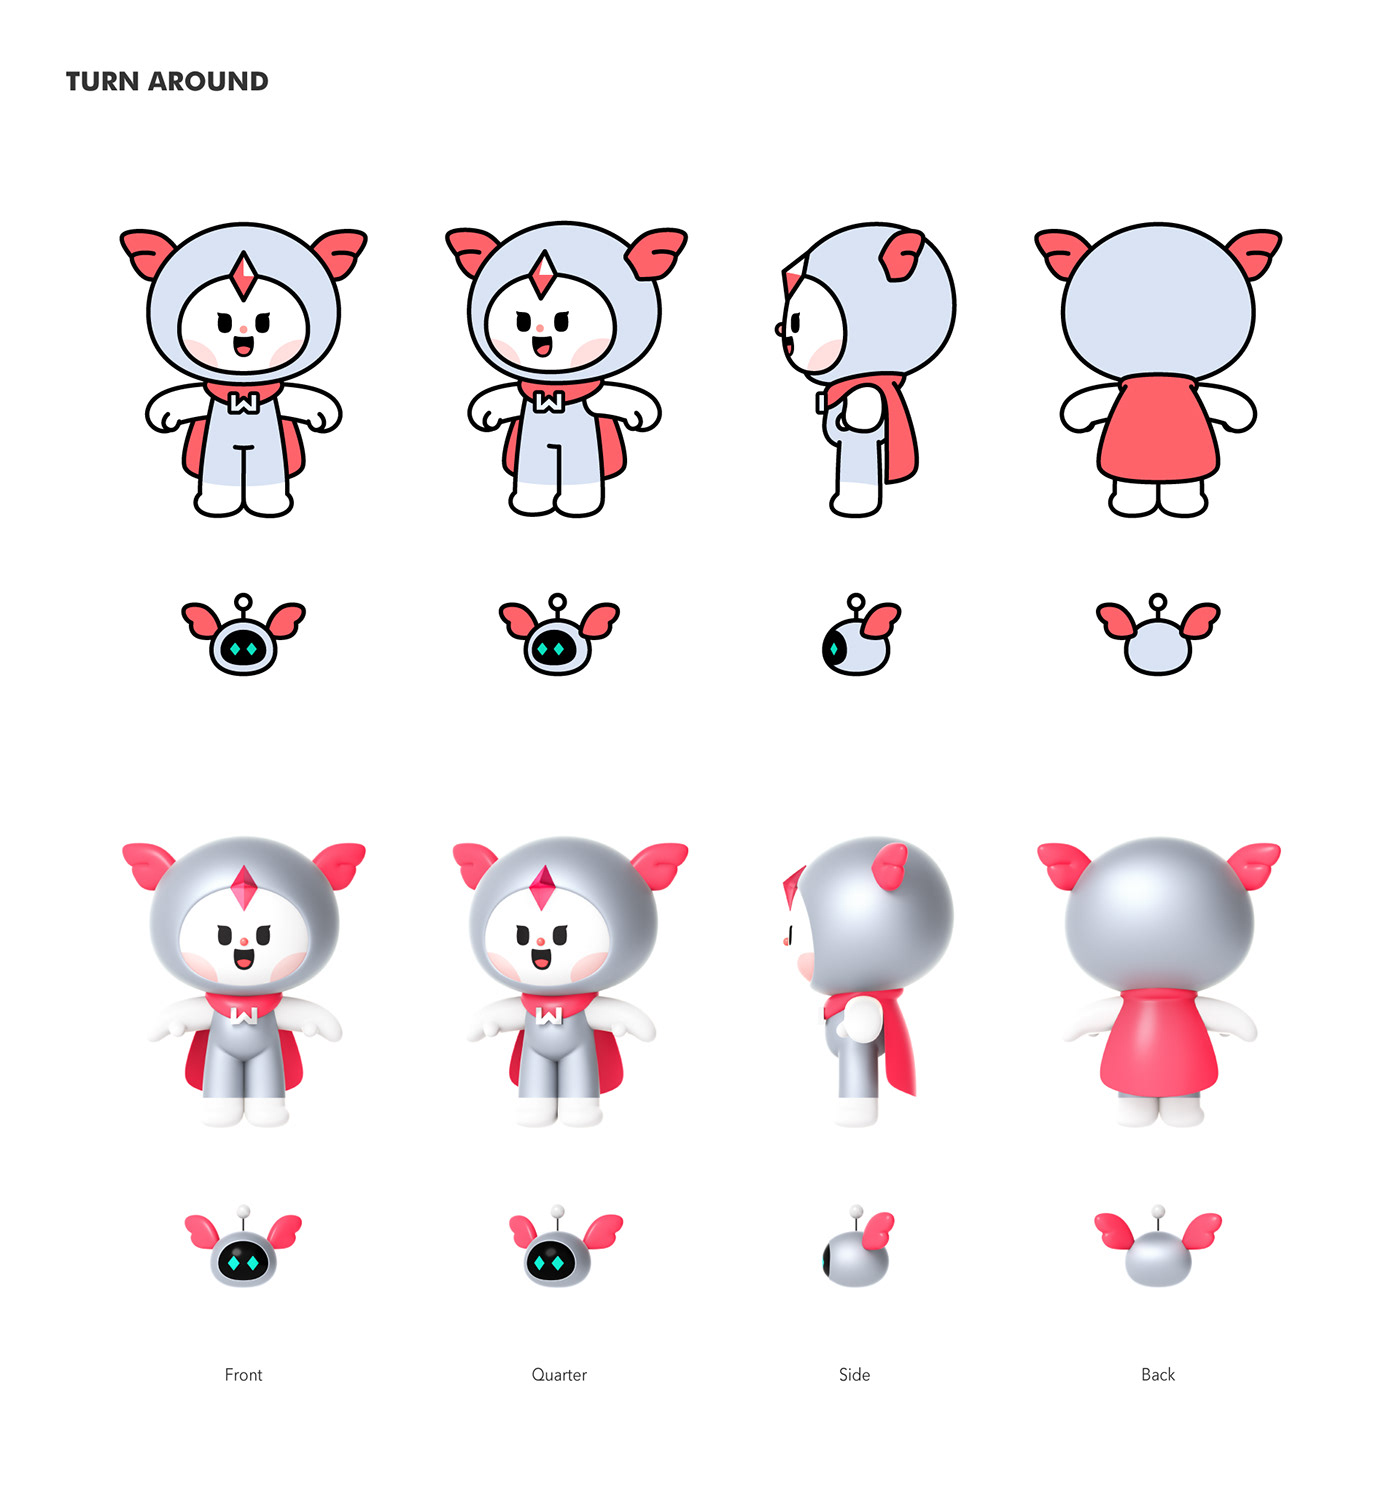 2D 3D branding  Character Emoticon Grabit Guide IP WULING 캐릭터